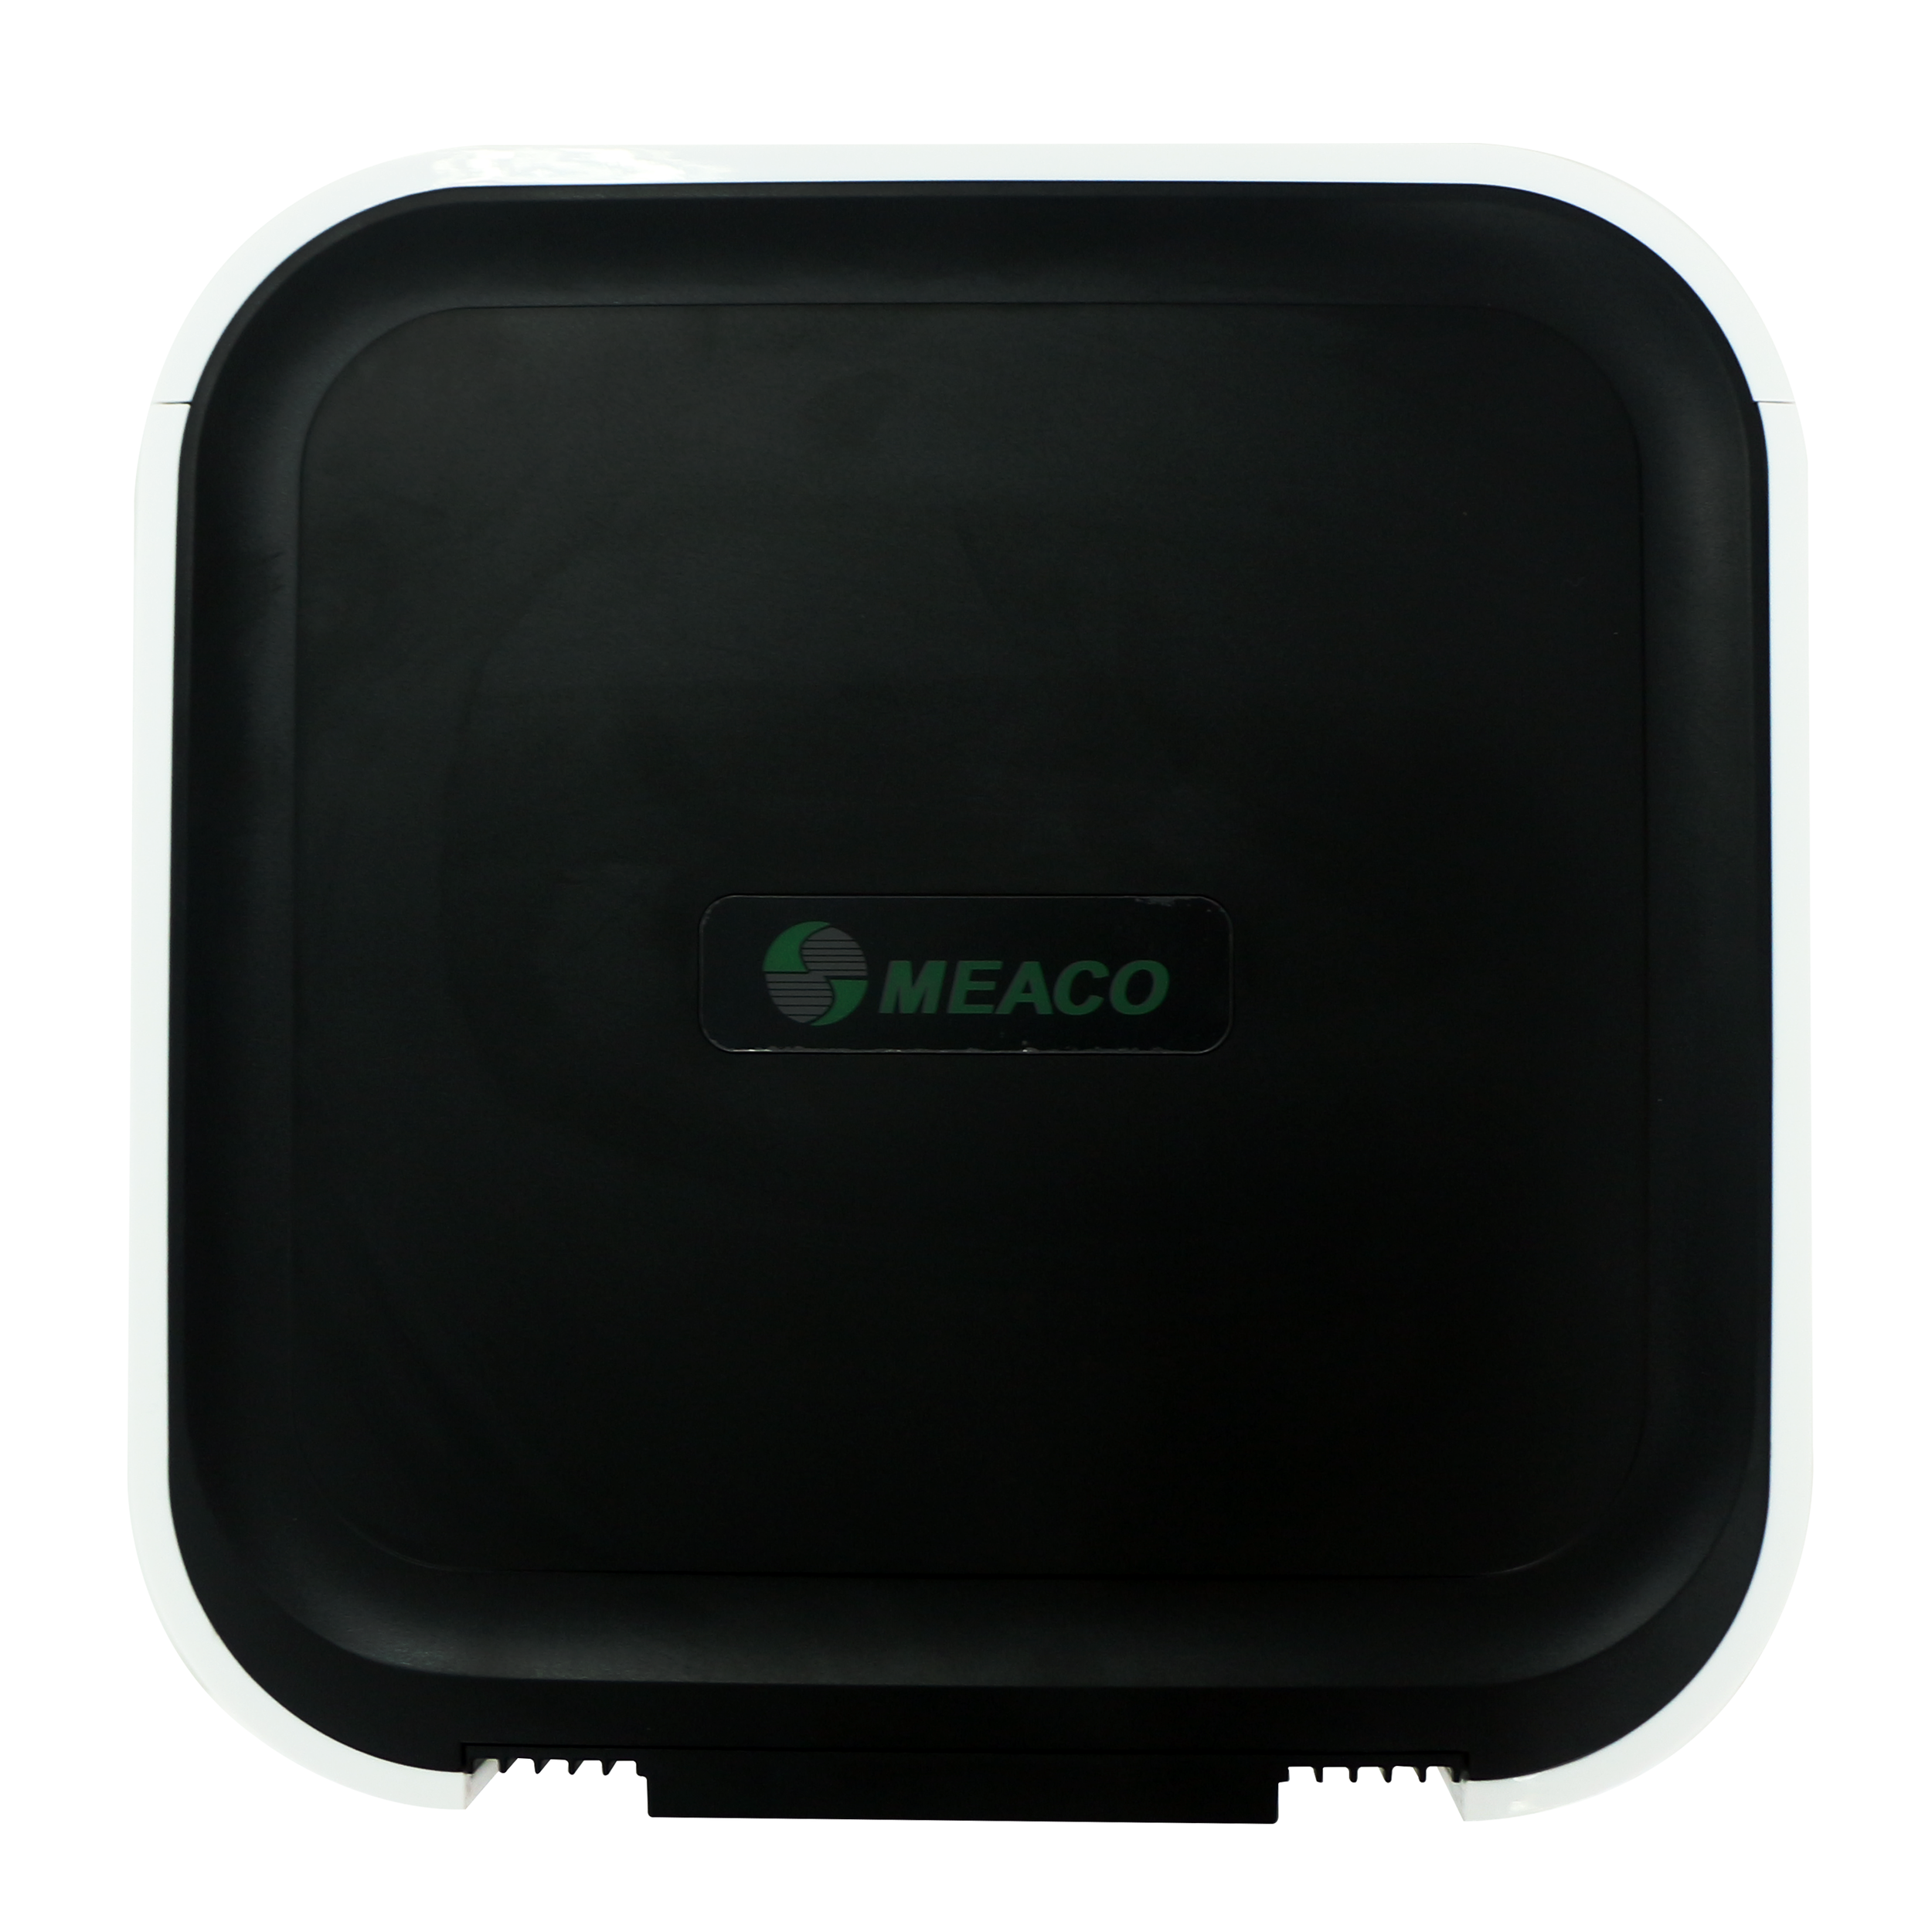 Meaco MC 8000 Top.png